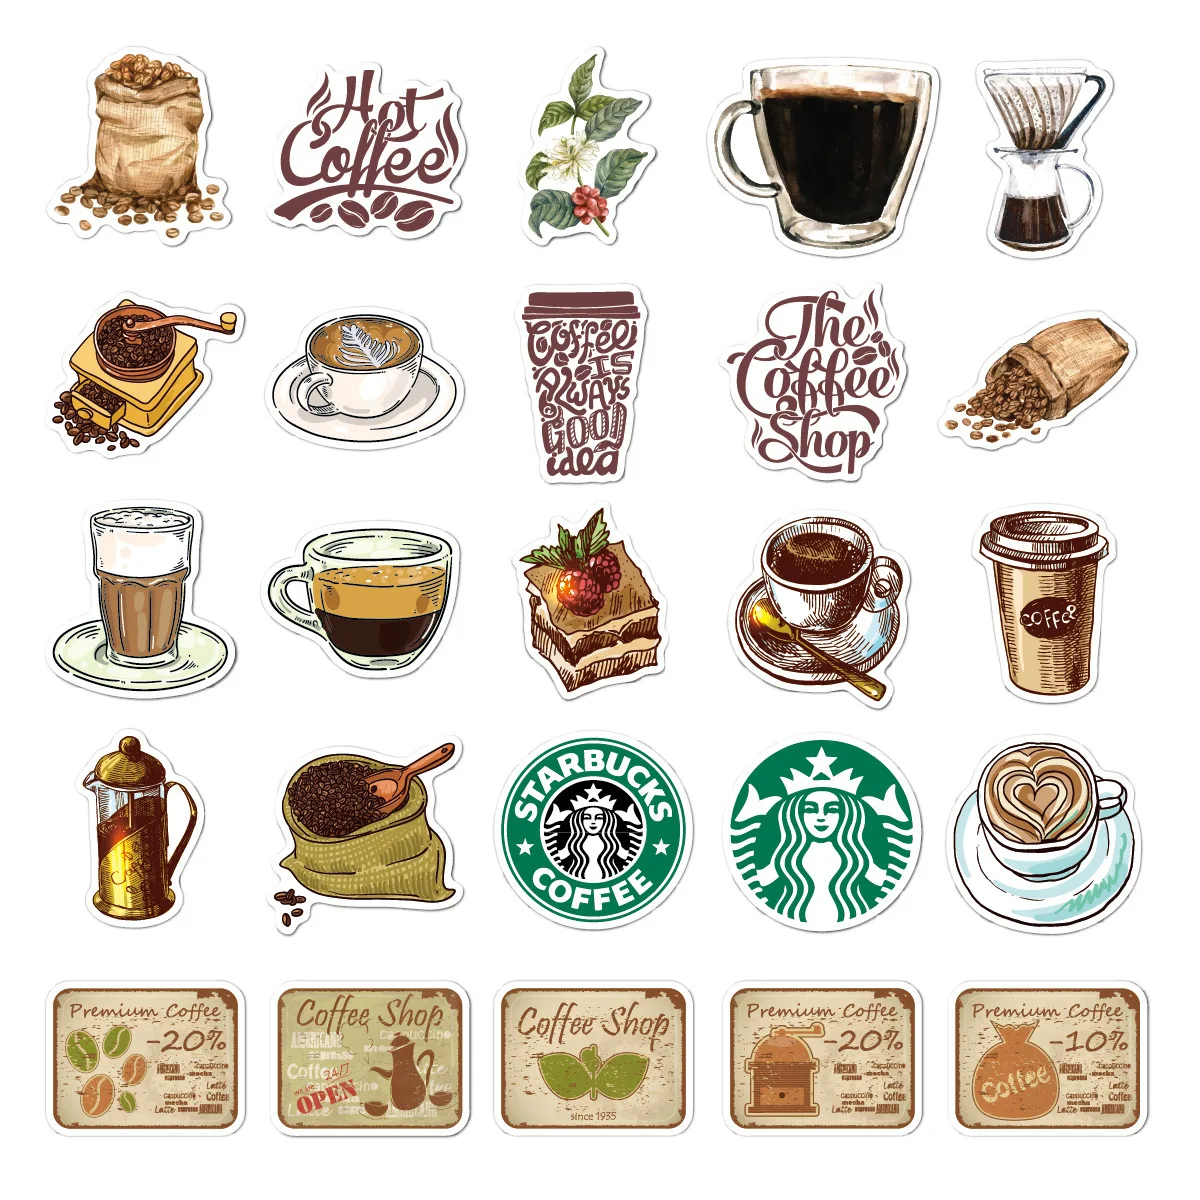 Custom Starbucks Sticker sheet